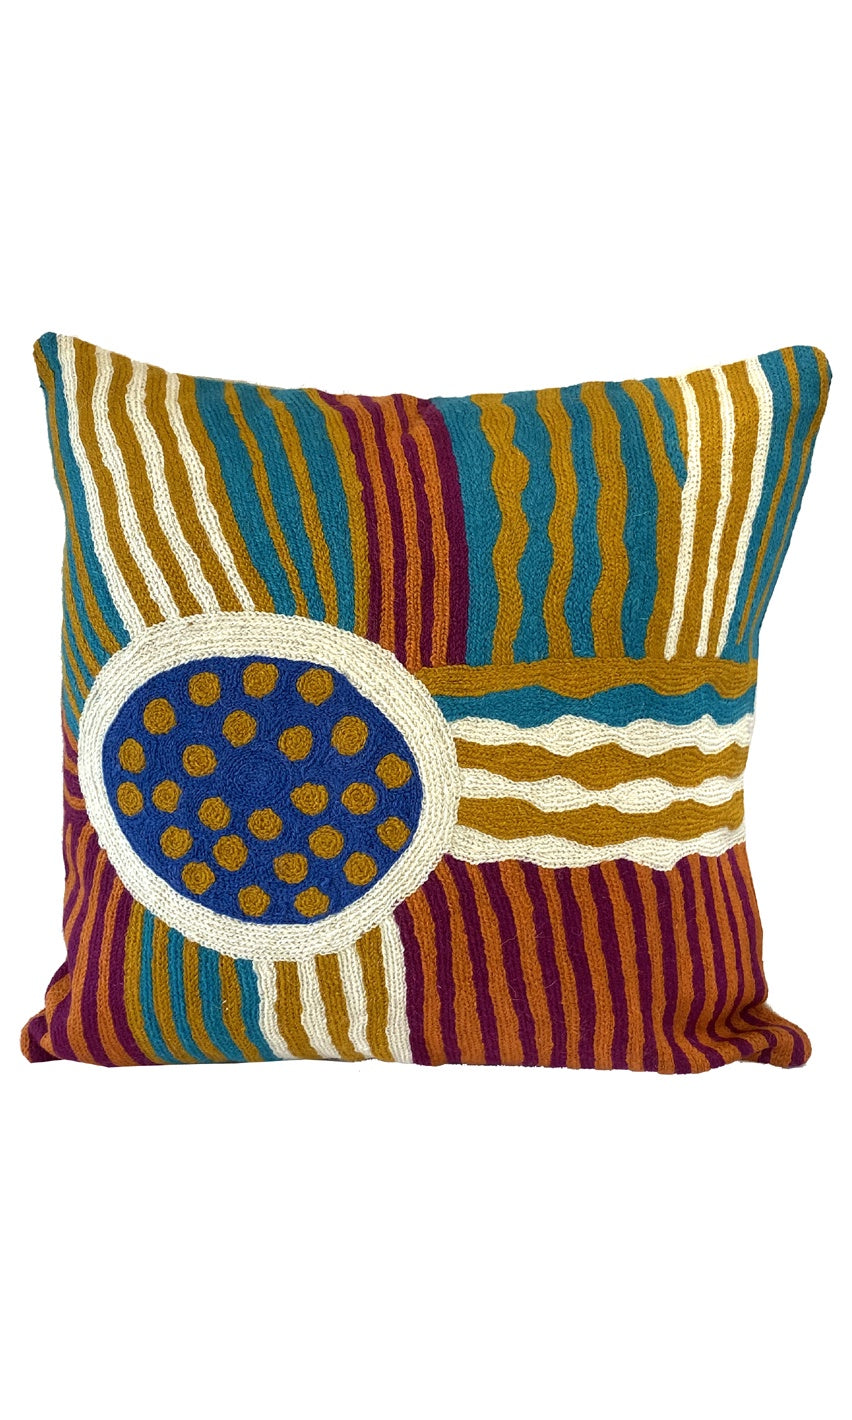 Aboriginal Art Cushion Cover by Sarah Lane